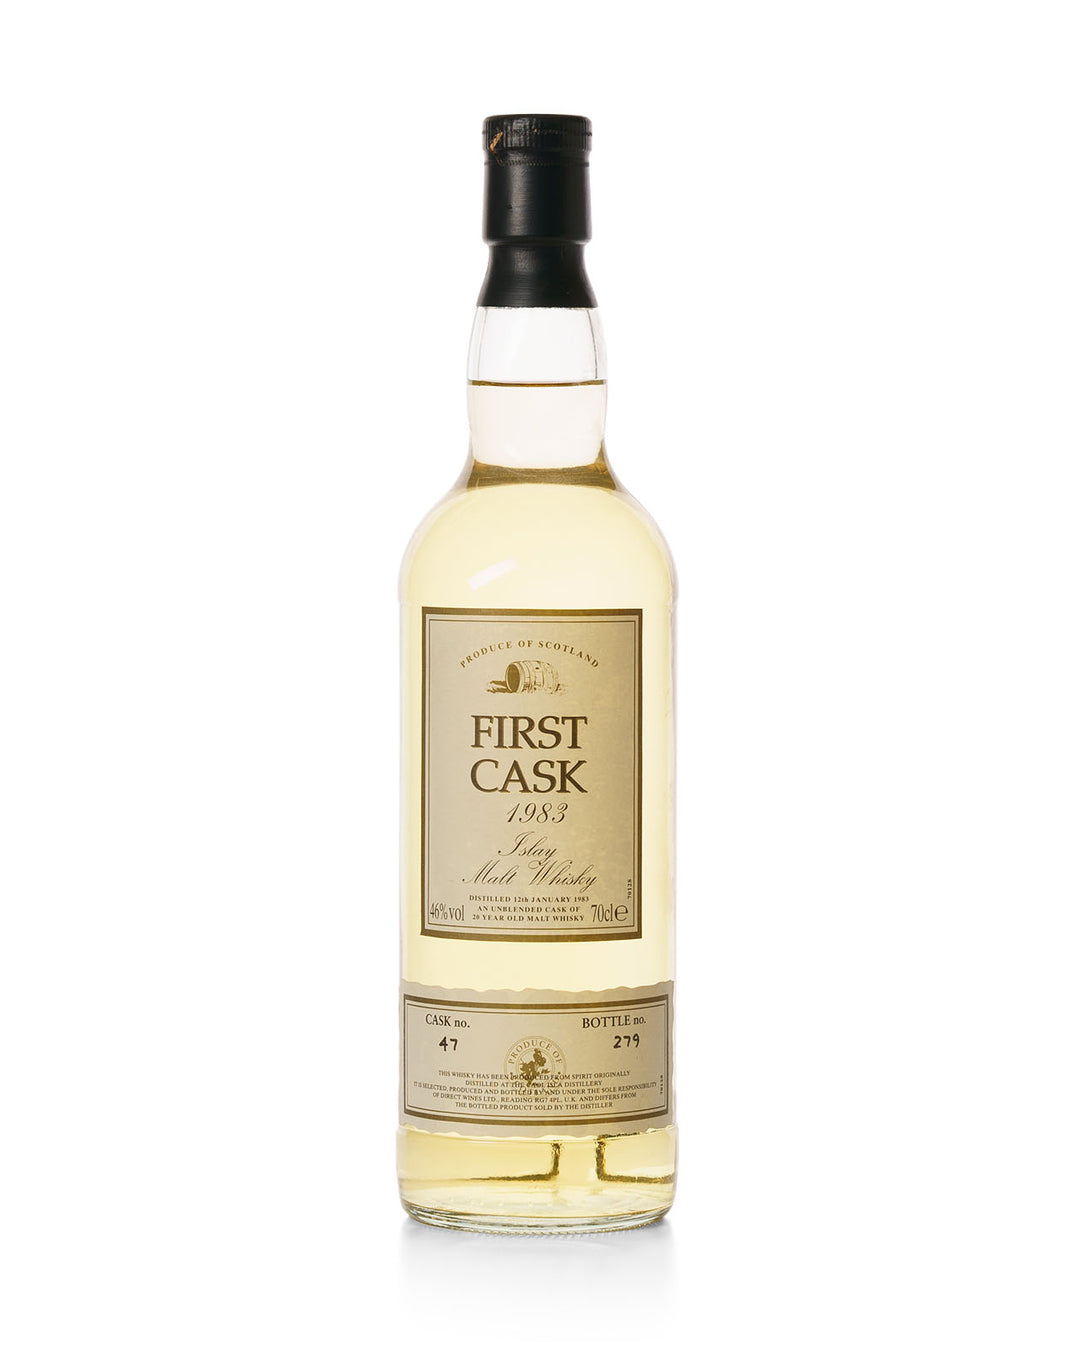 Caol Ila First Cask 1983 - 20 Year Old - Bottled in 2003